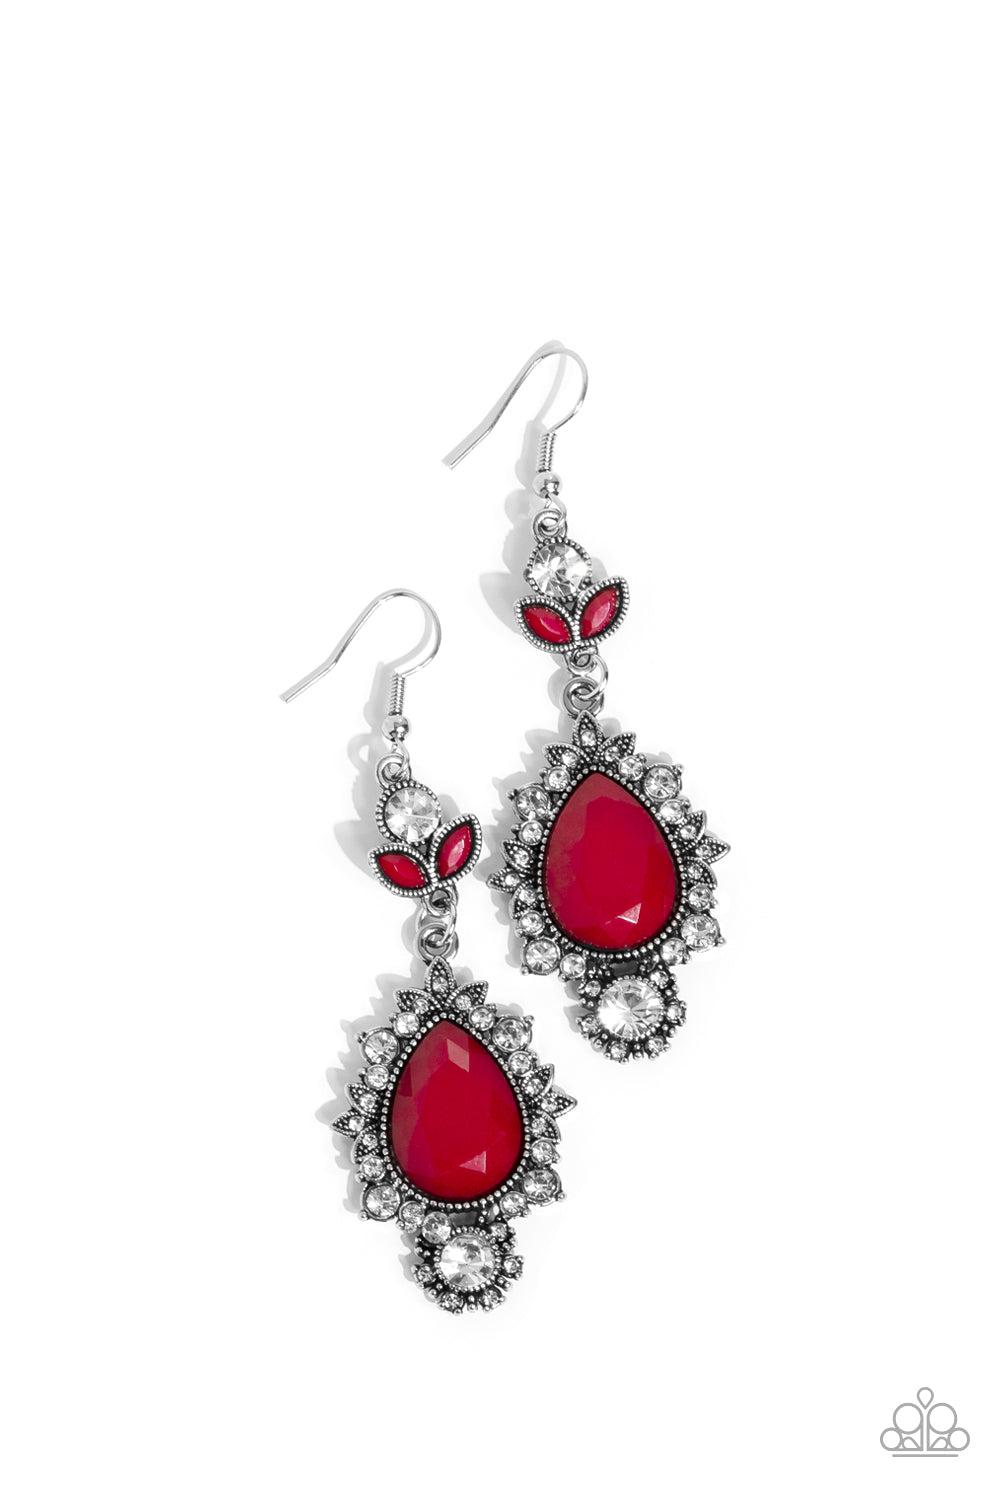 SELFIE-Esteem Red Earrings - Paparazzi Accessories- lightbox - CarasShop.com - $5 Jewelry by Cara Jewels